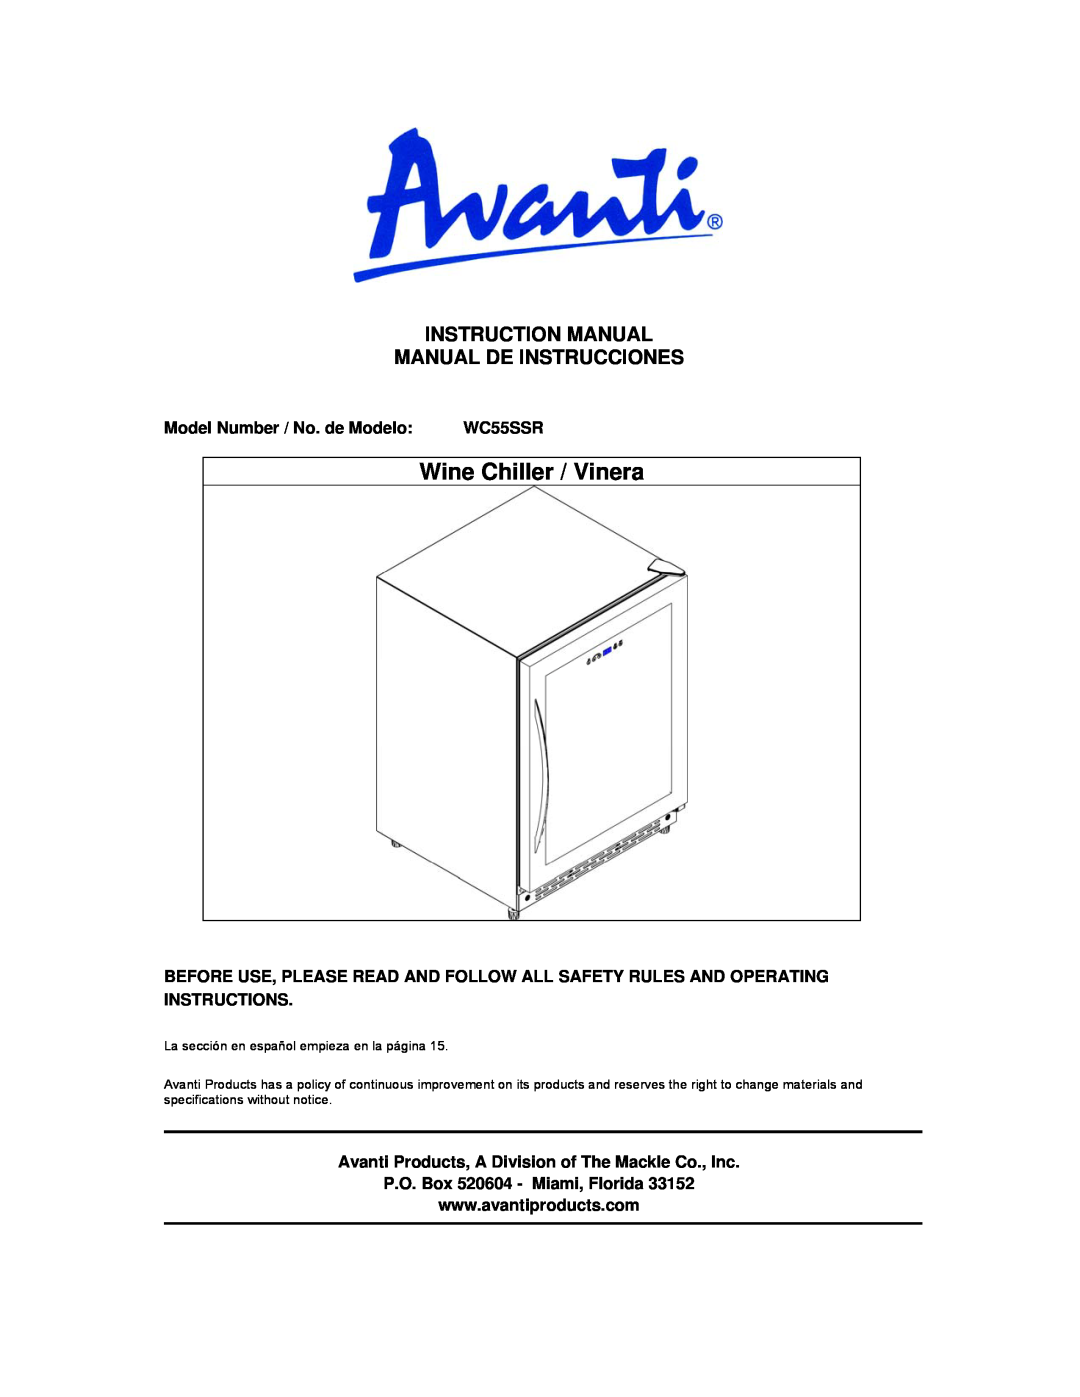 Avanti WC55SSR instruction manual Model Number / No. de Modelo, Avanti Products, A Division of The Mackle Co., Inc 